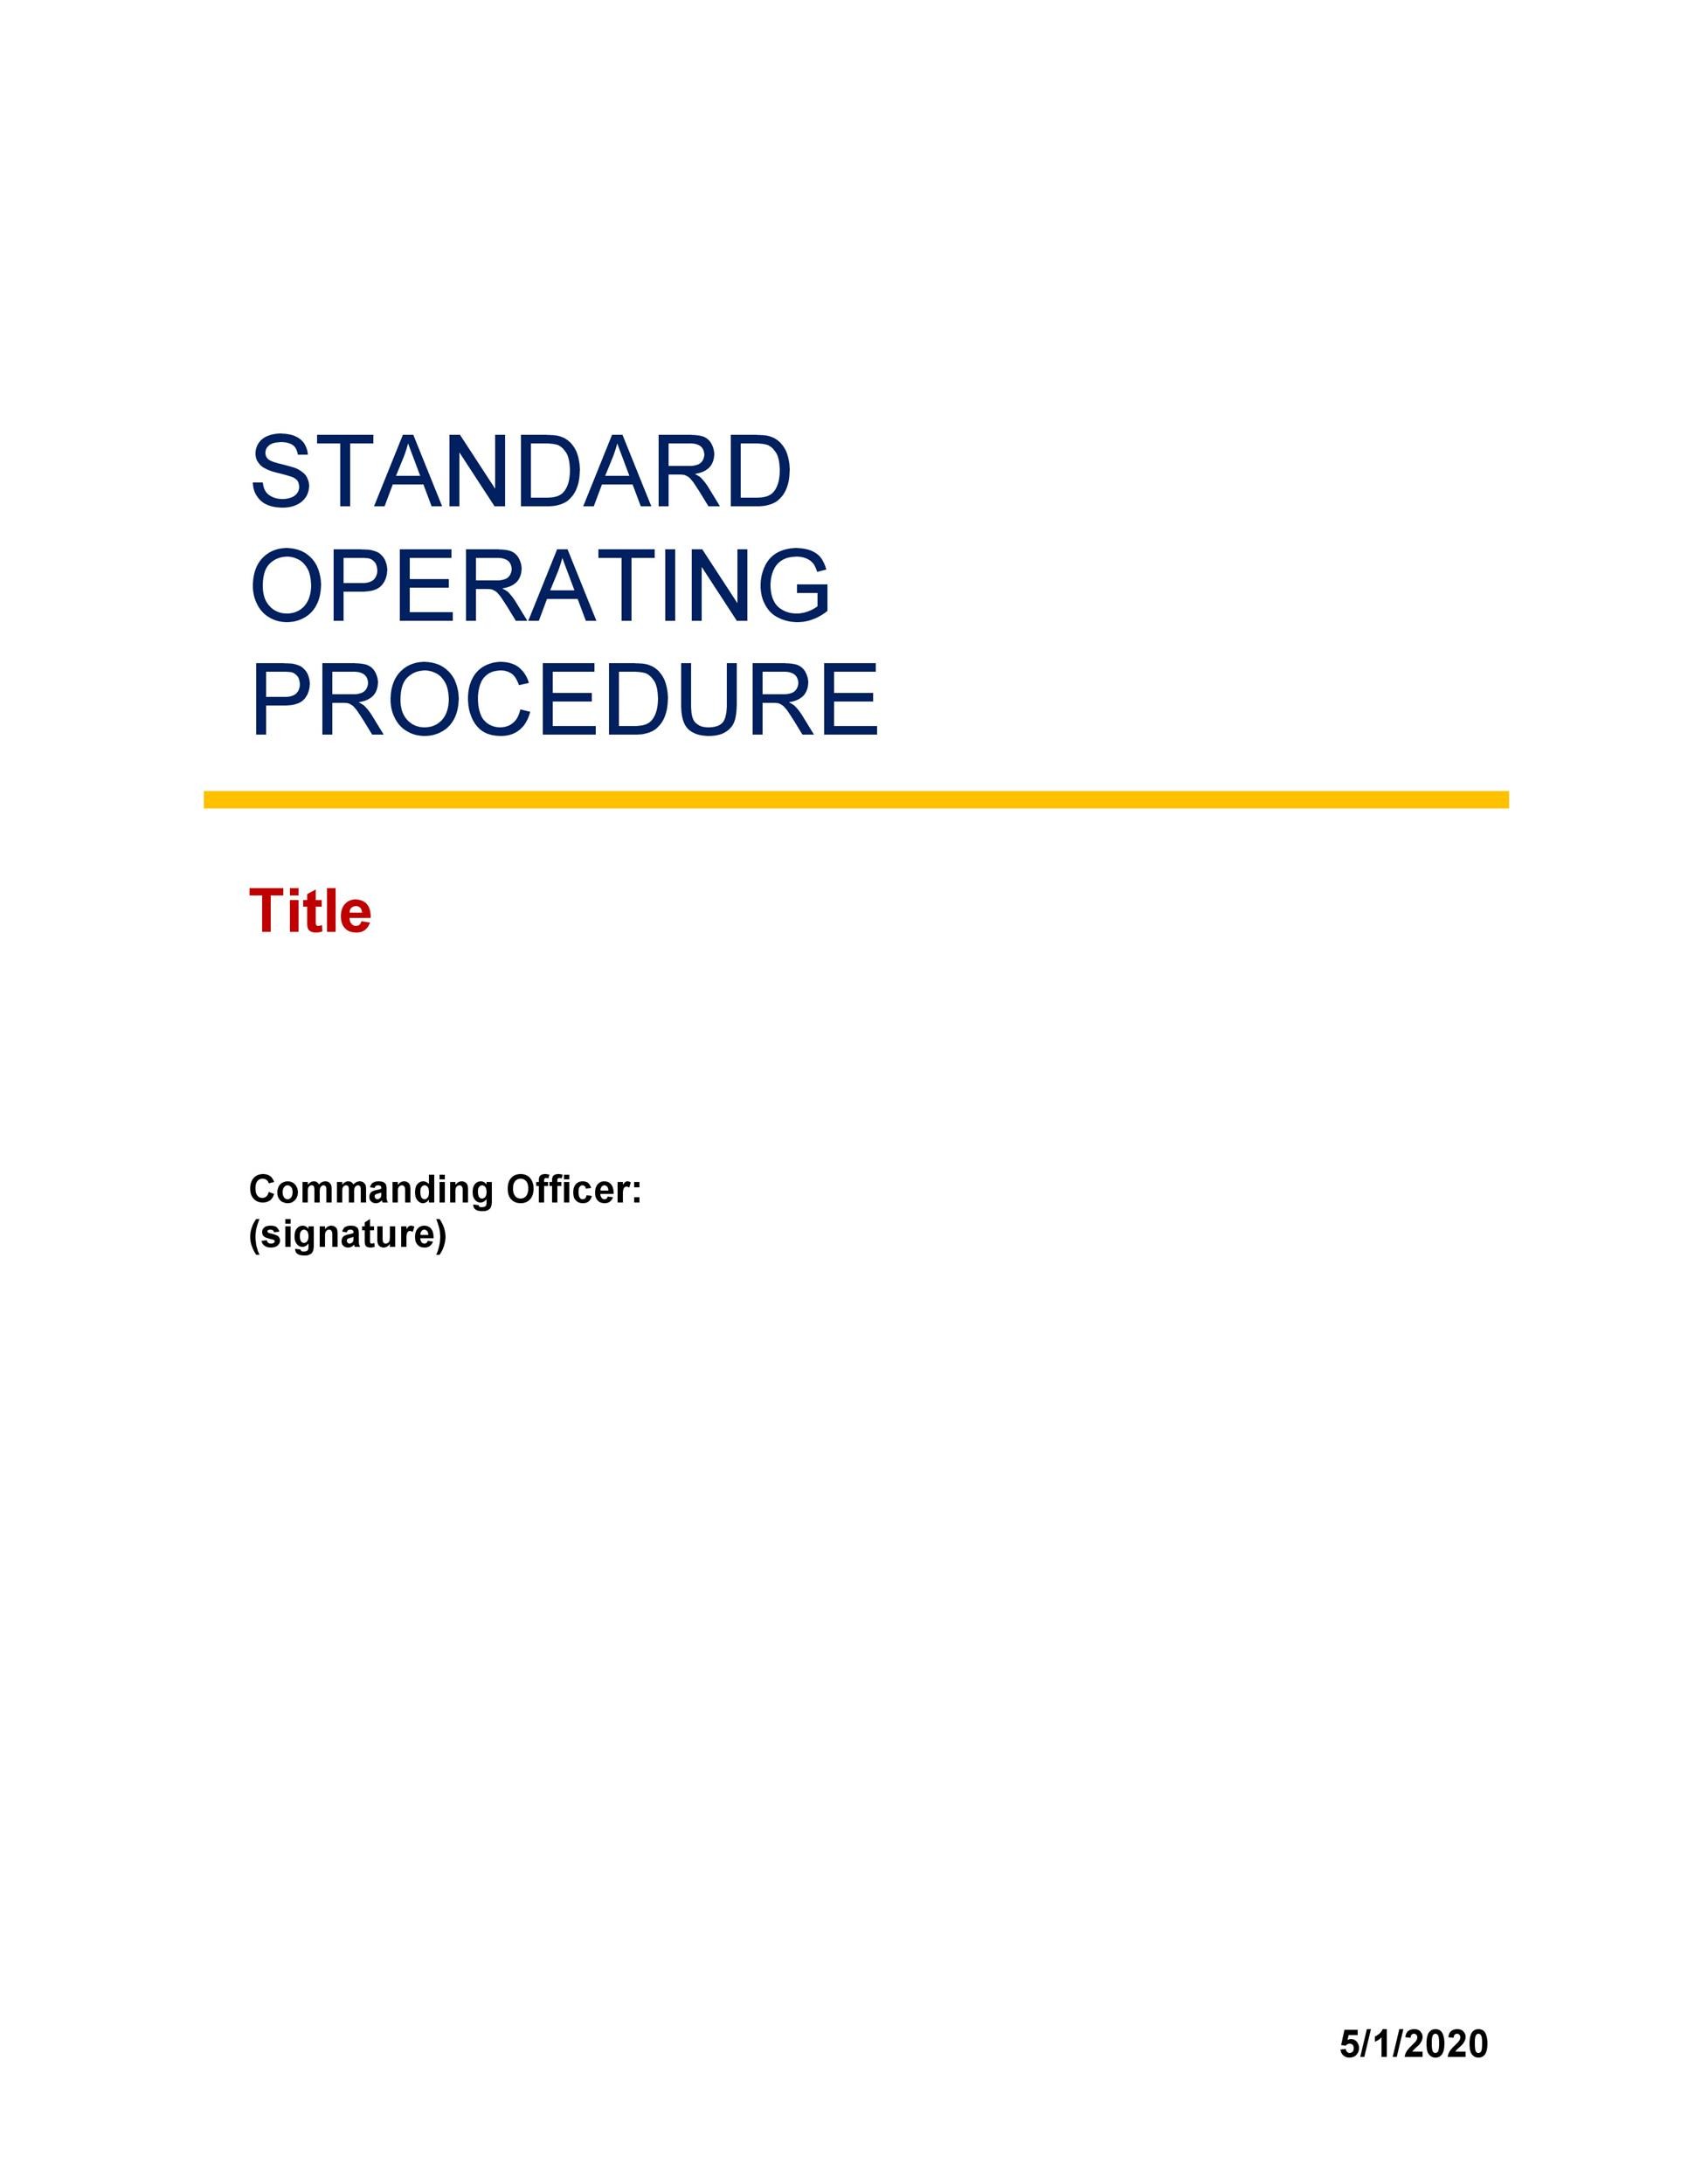 Standard Operating Procedure Template Microsoft Word from templatelab.com